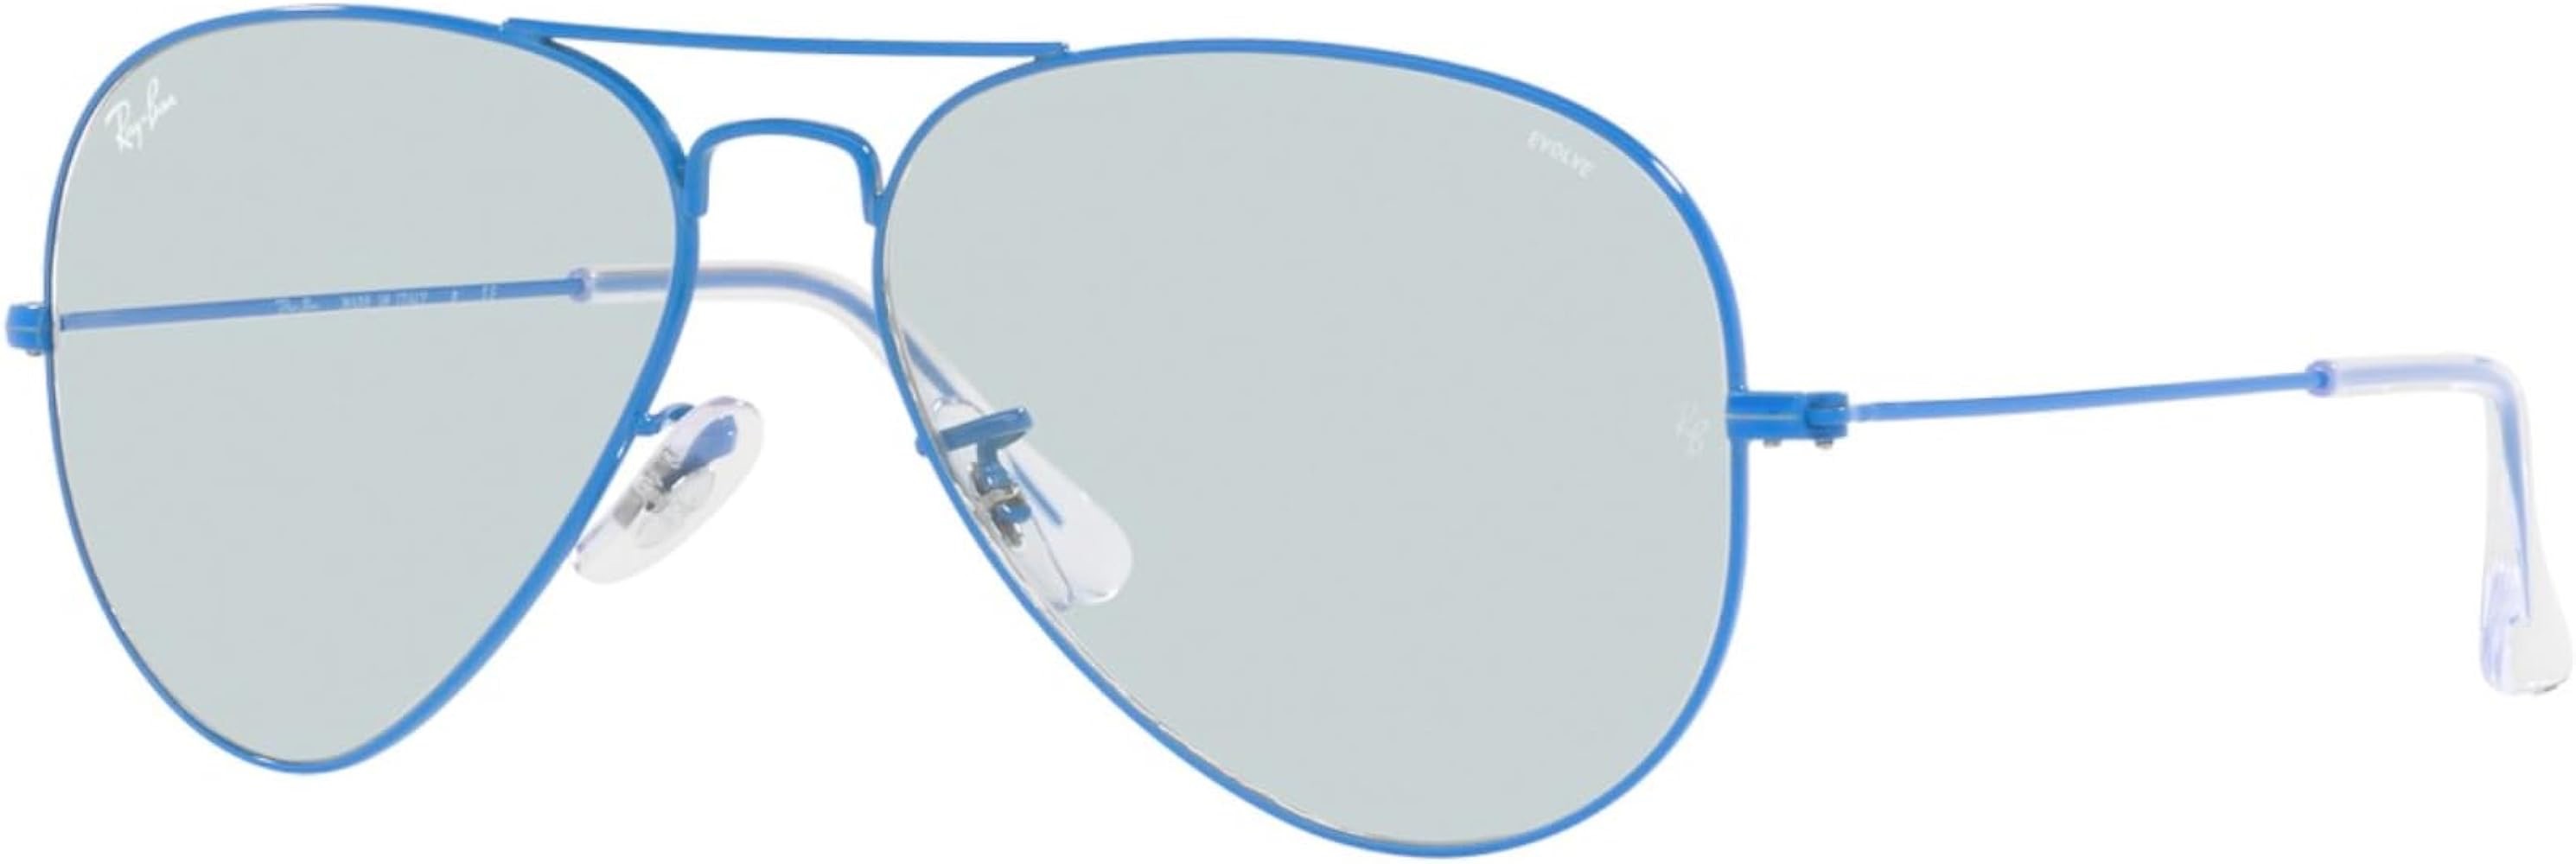 Amazon.com: Ray-Ban Rb3025 Classic Polarized Aviator Sunglasses, Light Blue/Photochromic Evolve Grey/Dark Violet, 55 mm : Clothing, Shoes & Jewelry